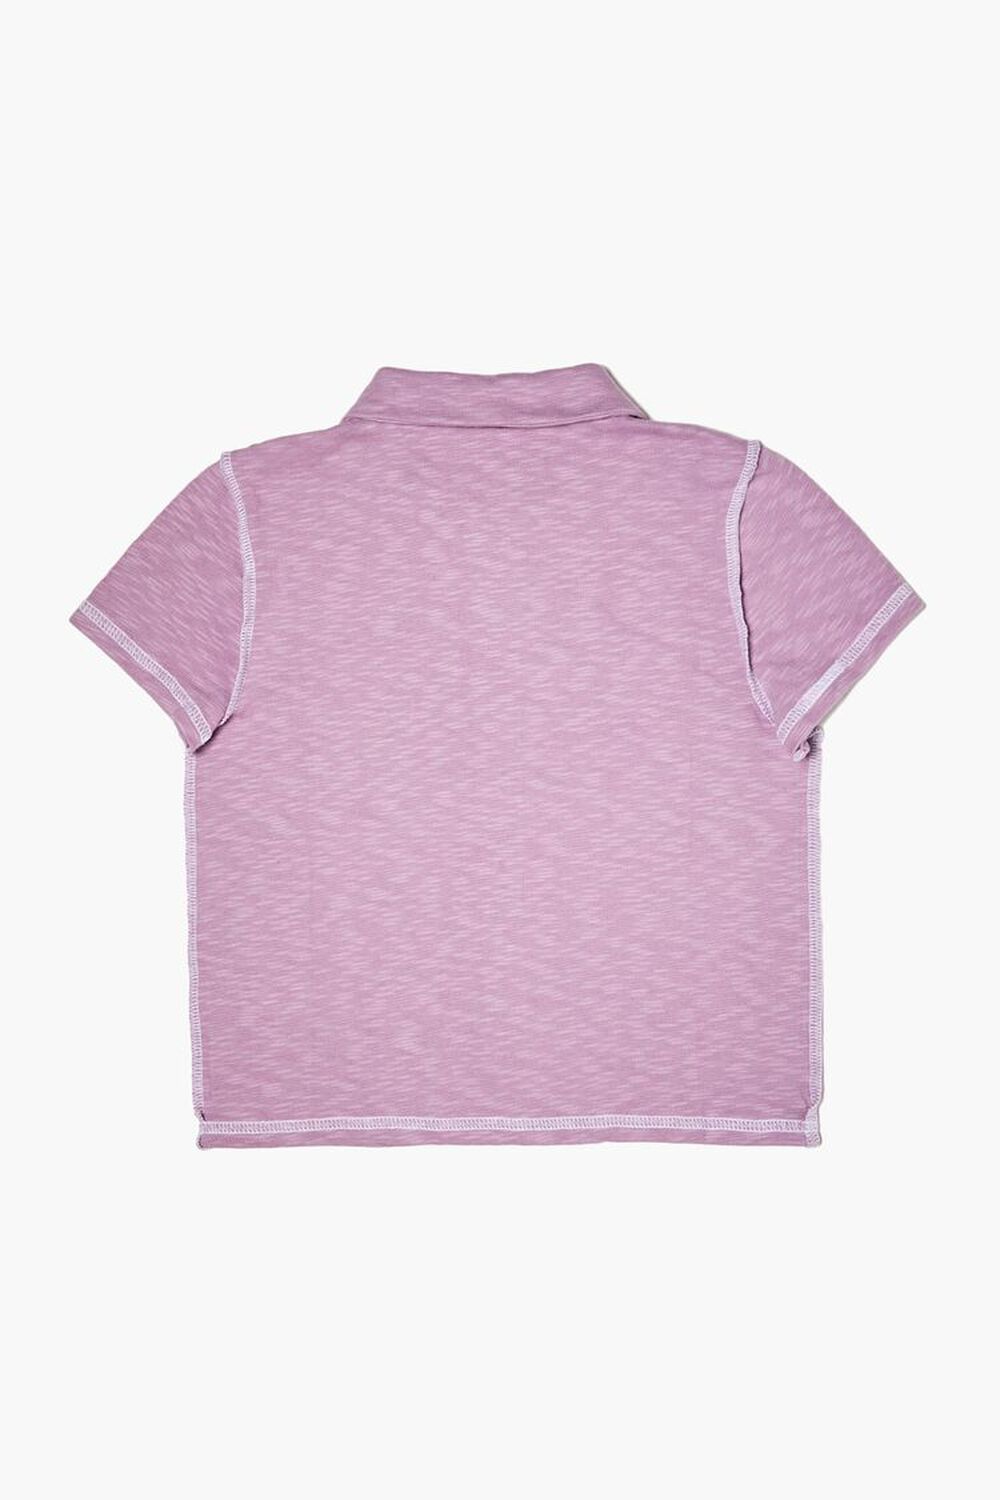 LAVENDER Girls Button-Front Shirt (Kids), image 2